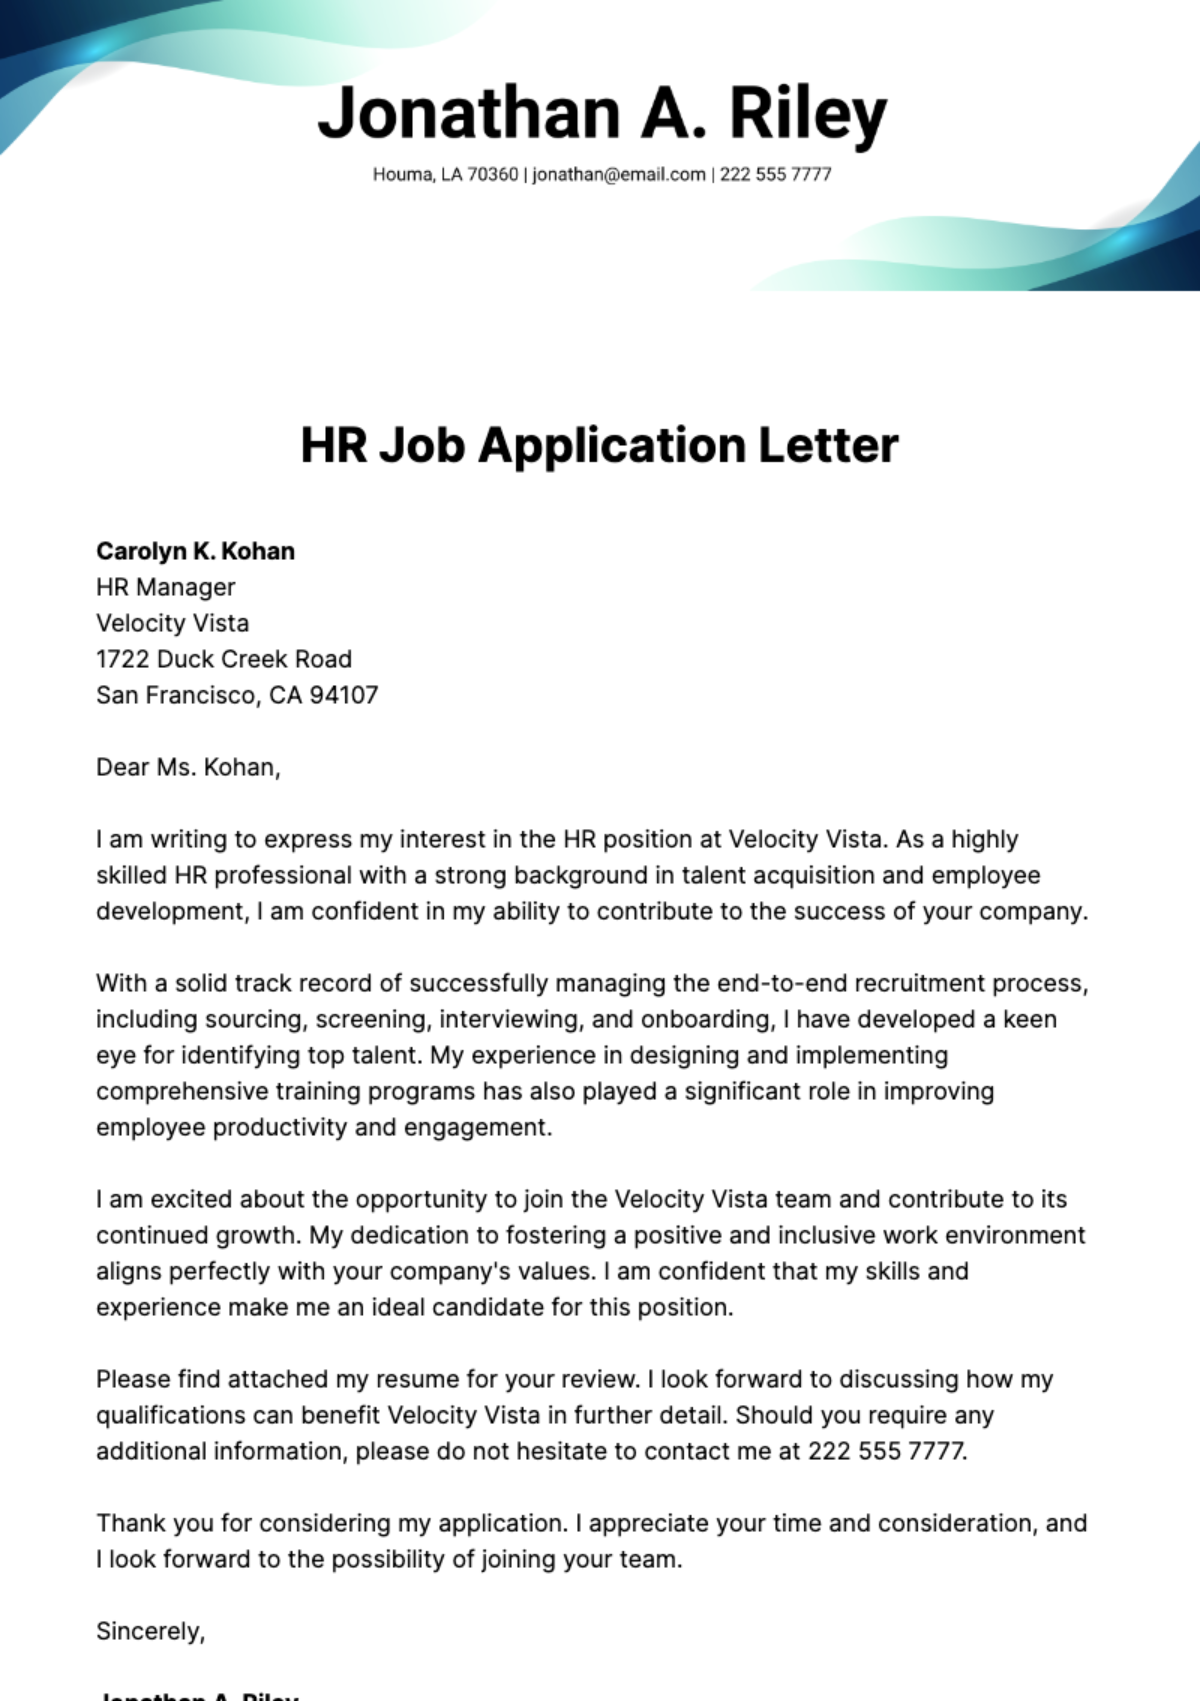 Free HR Job Application Letter Template